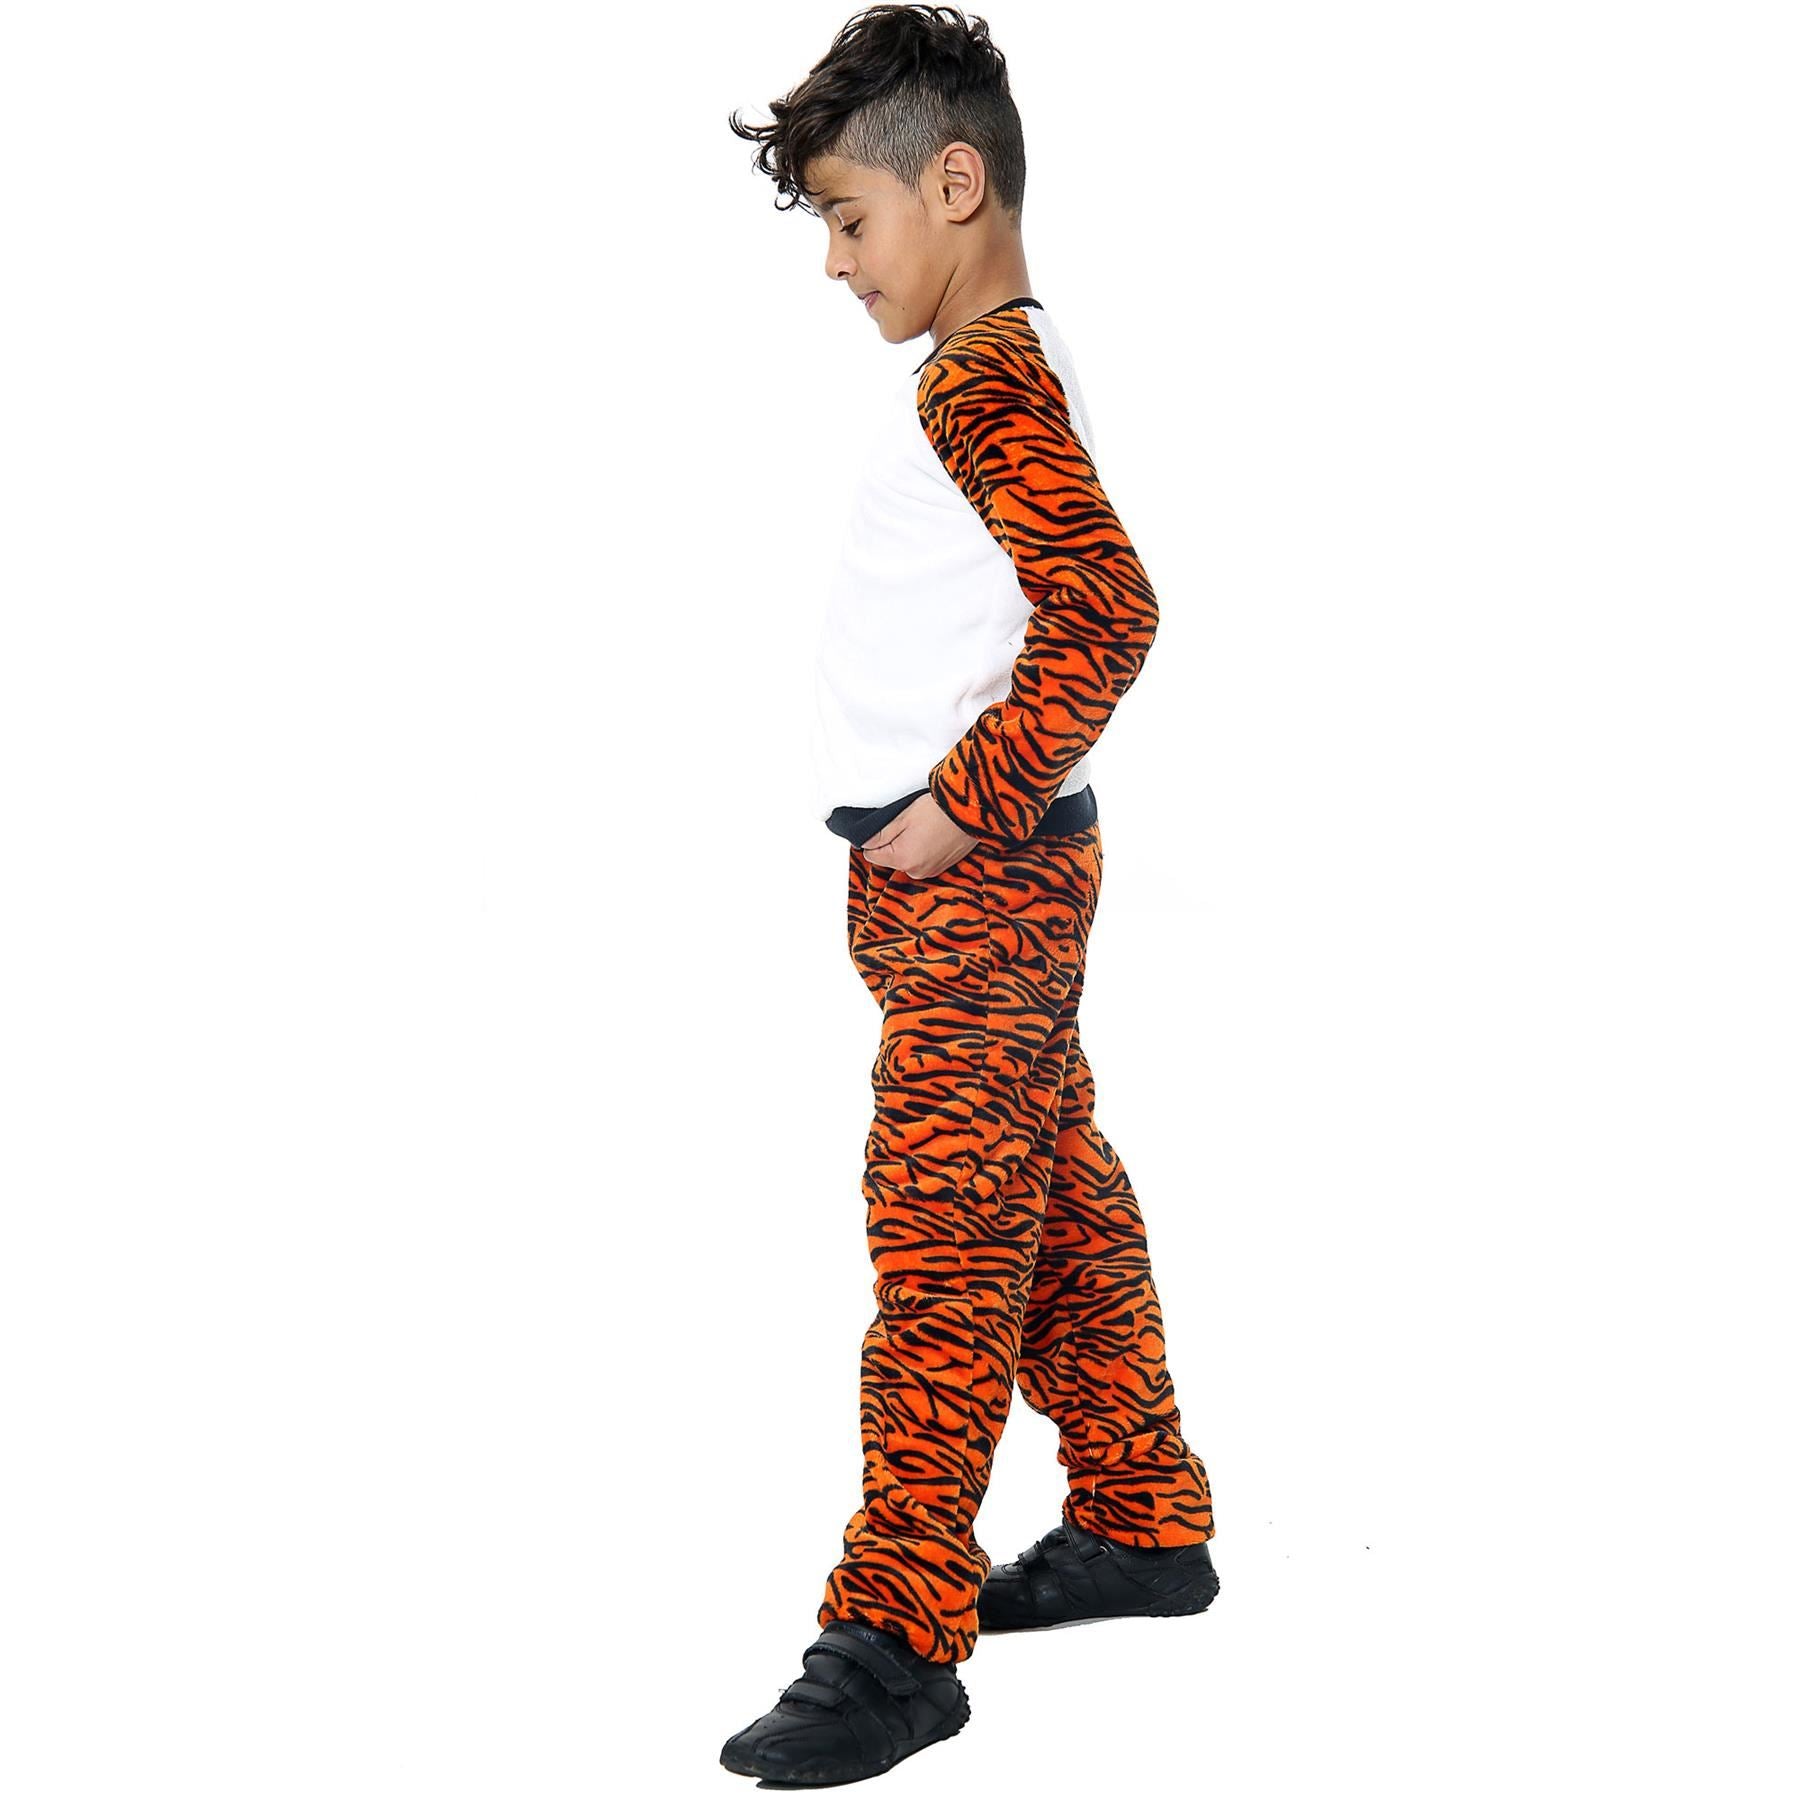 Kids Tiger Print Sleeve Pyjamas Sleepsuit Costume For Girls Boys Age 5-13